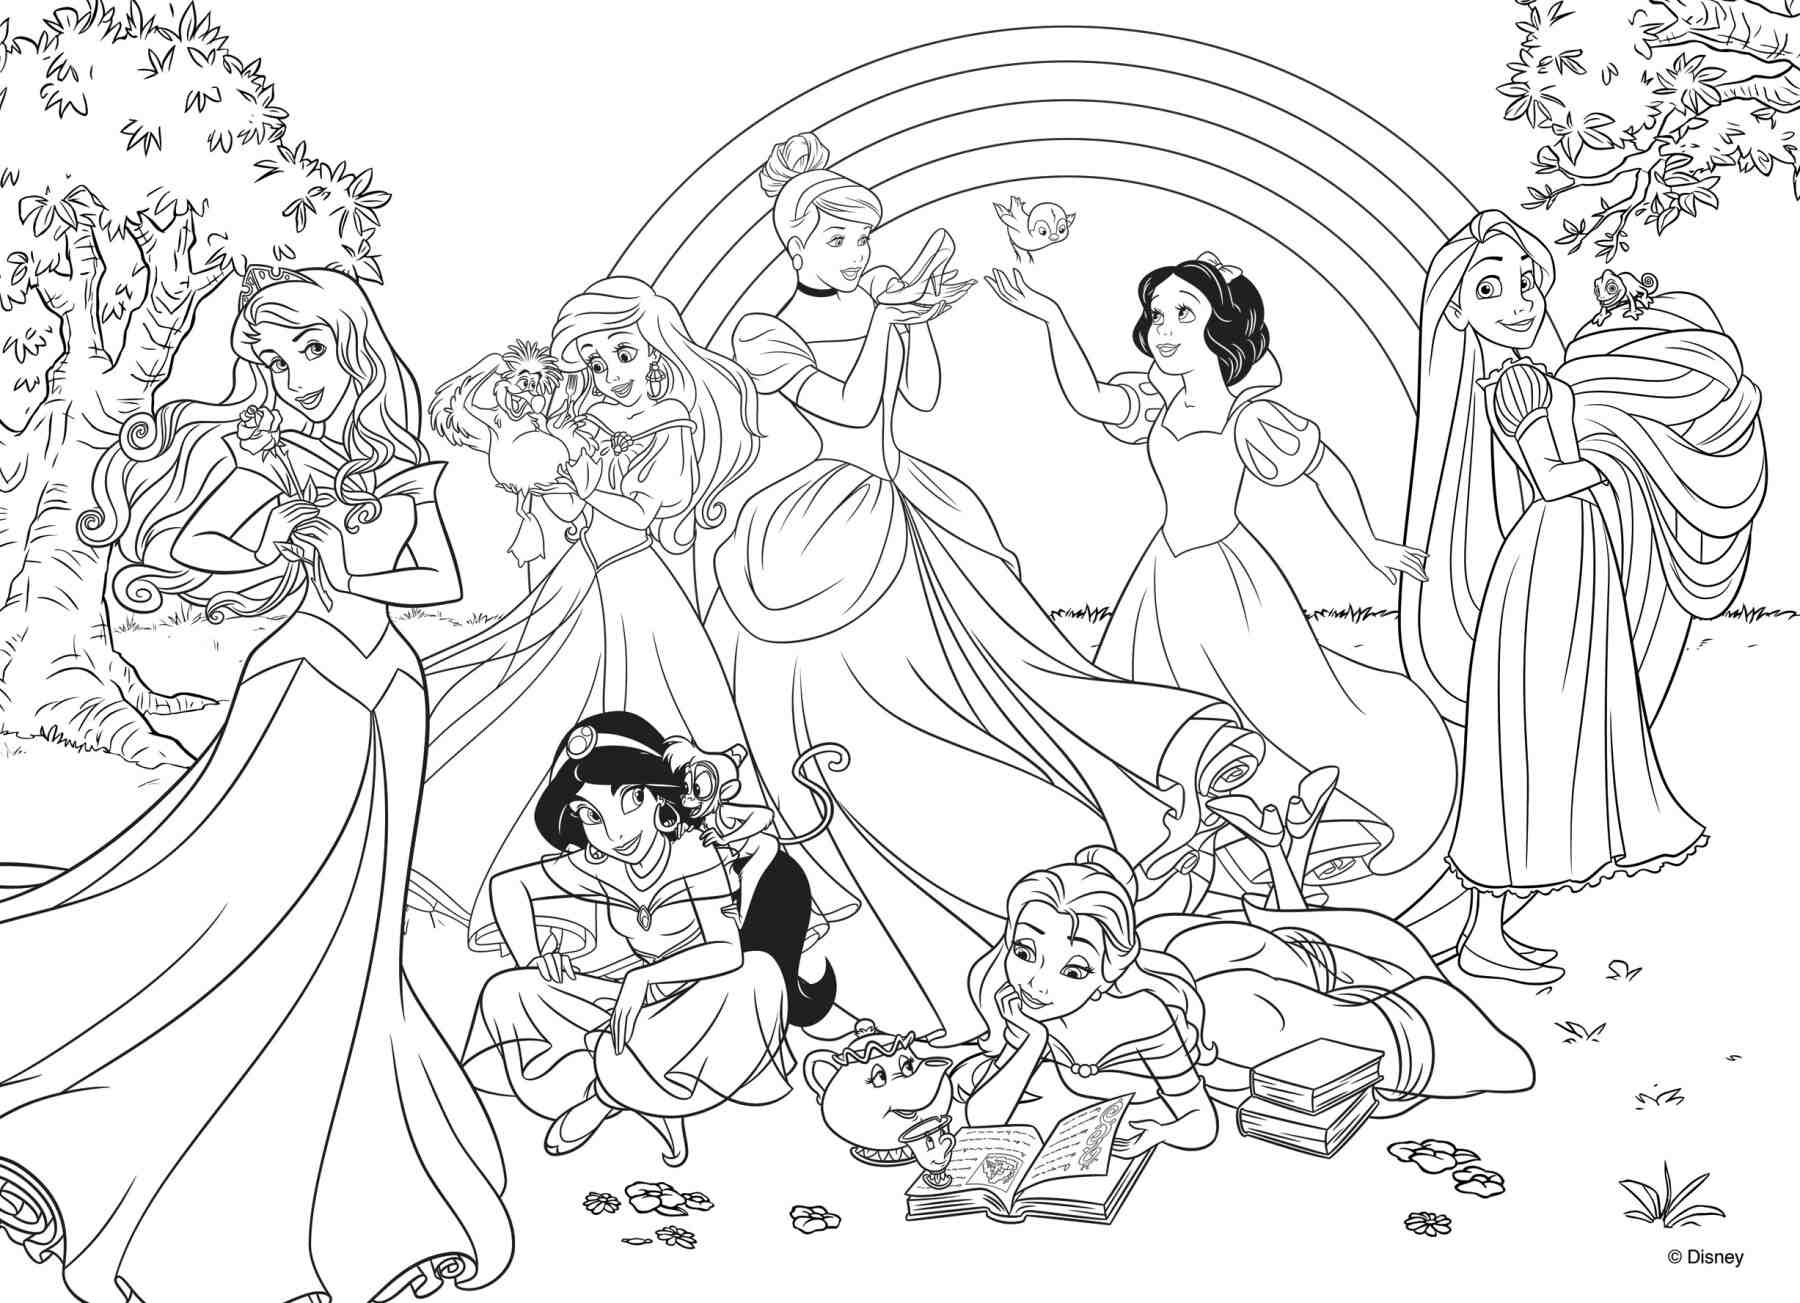 Disney puzzle df maxi floor 24 princess - DISNEY PRINCESS, LISCIANI